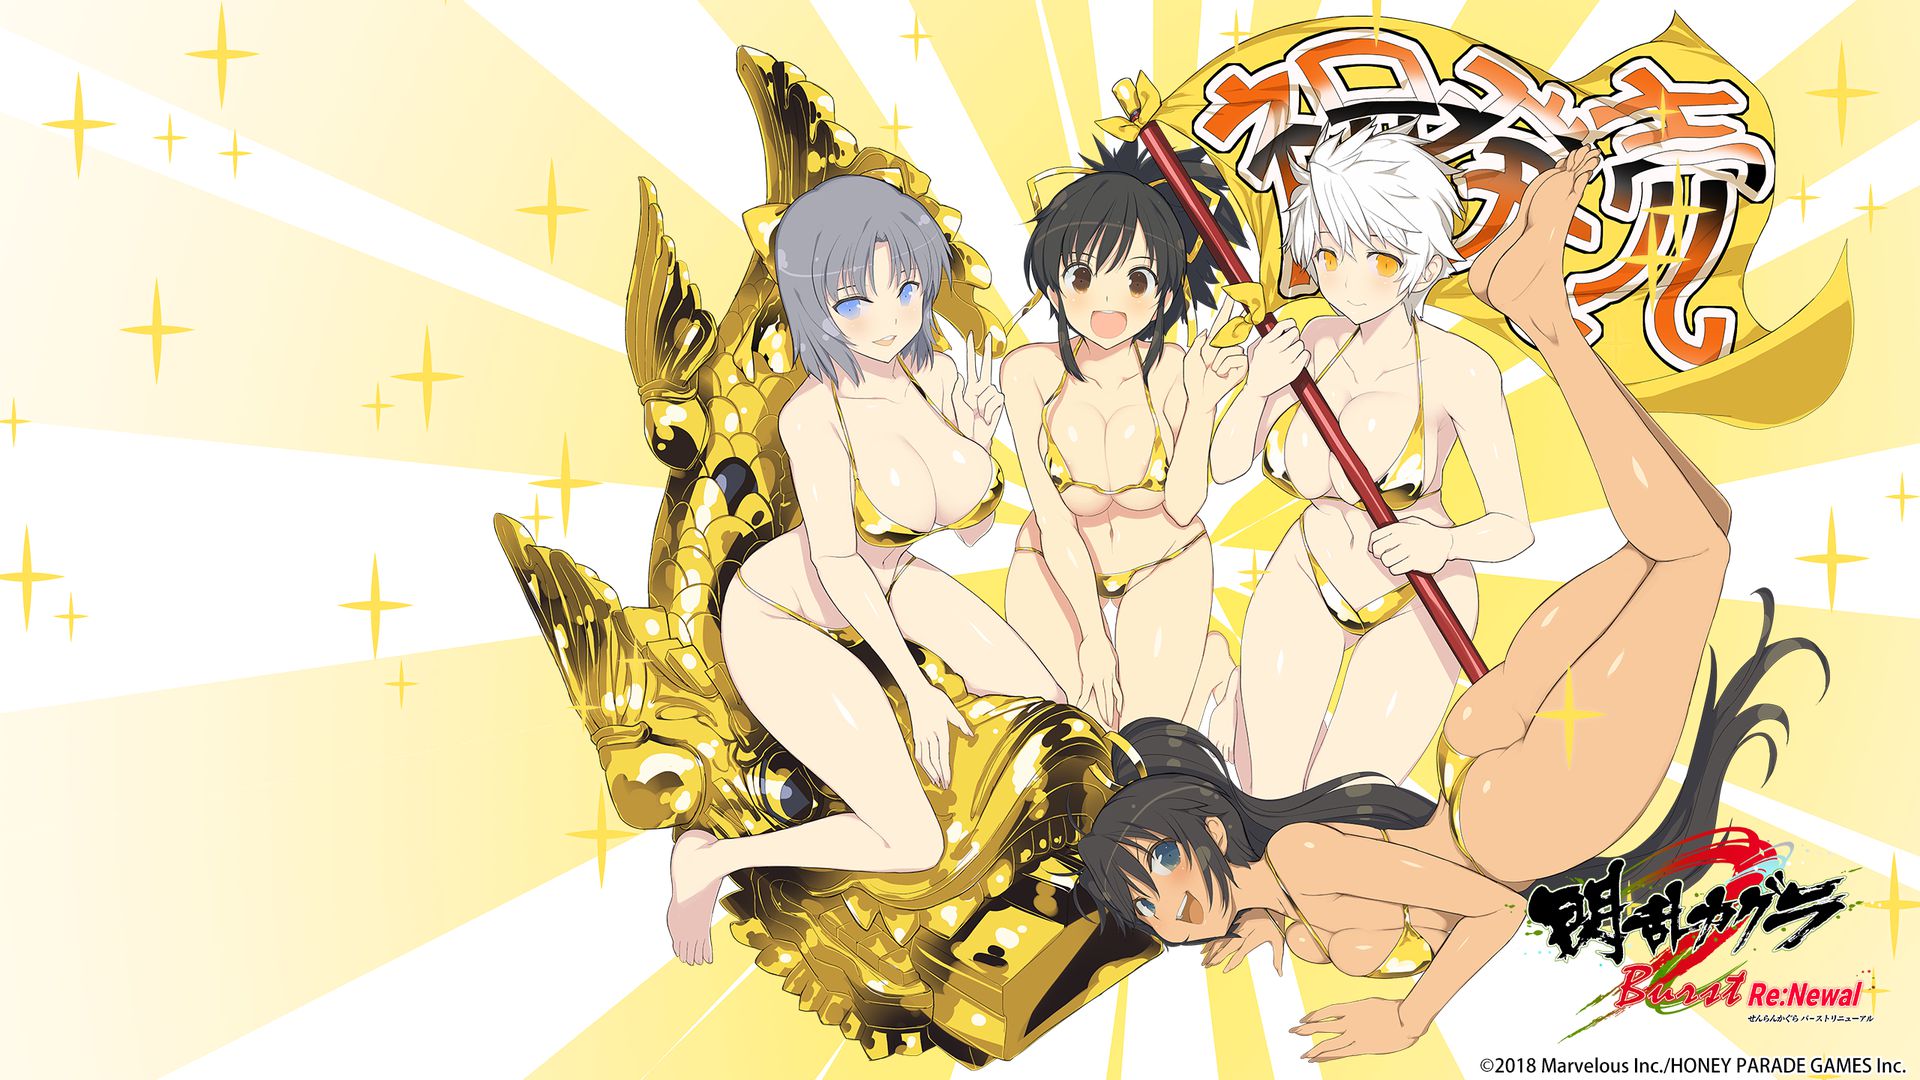 [Senran Kagura Burst Re: newal] Erotic swimsuit illustration wallpaper and PS4 theme in commemoration of release! 6